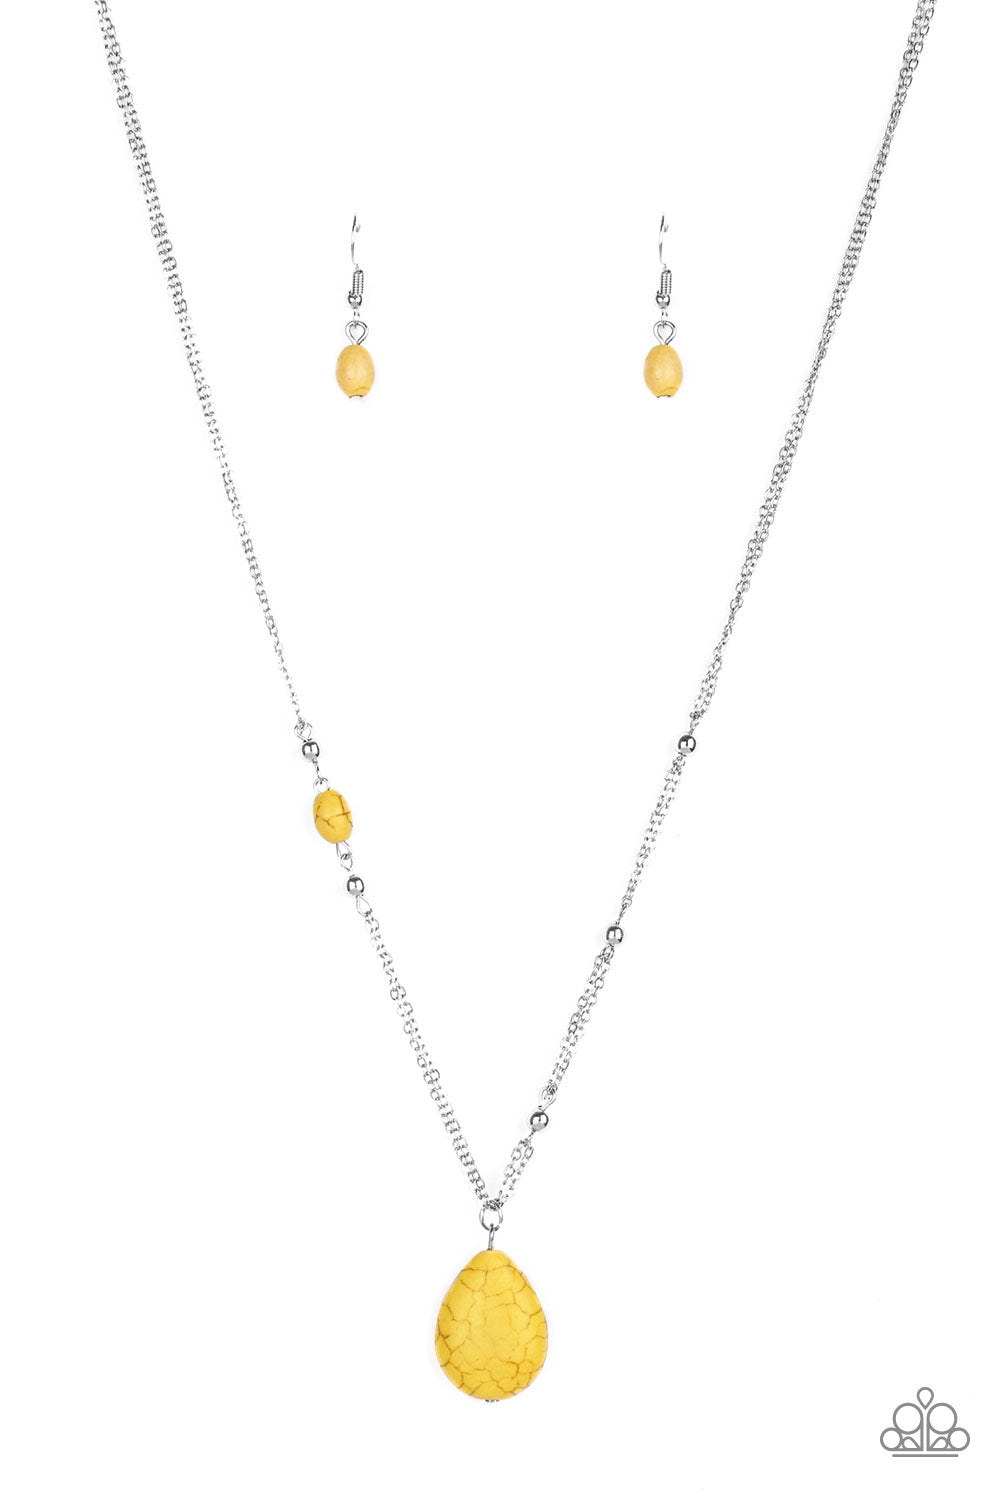 Peaceful Prairies - Yellow Necklace Set